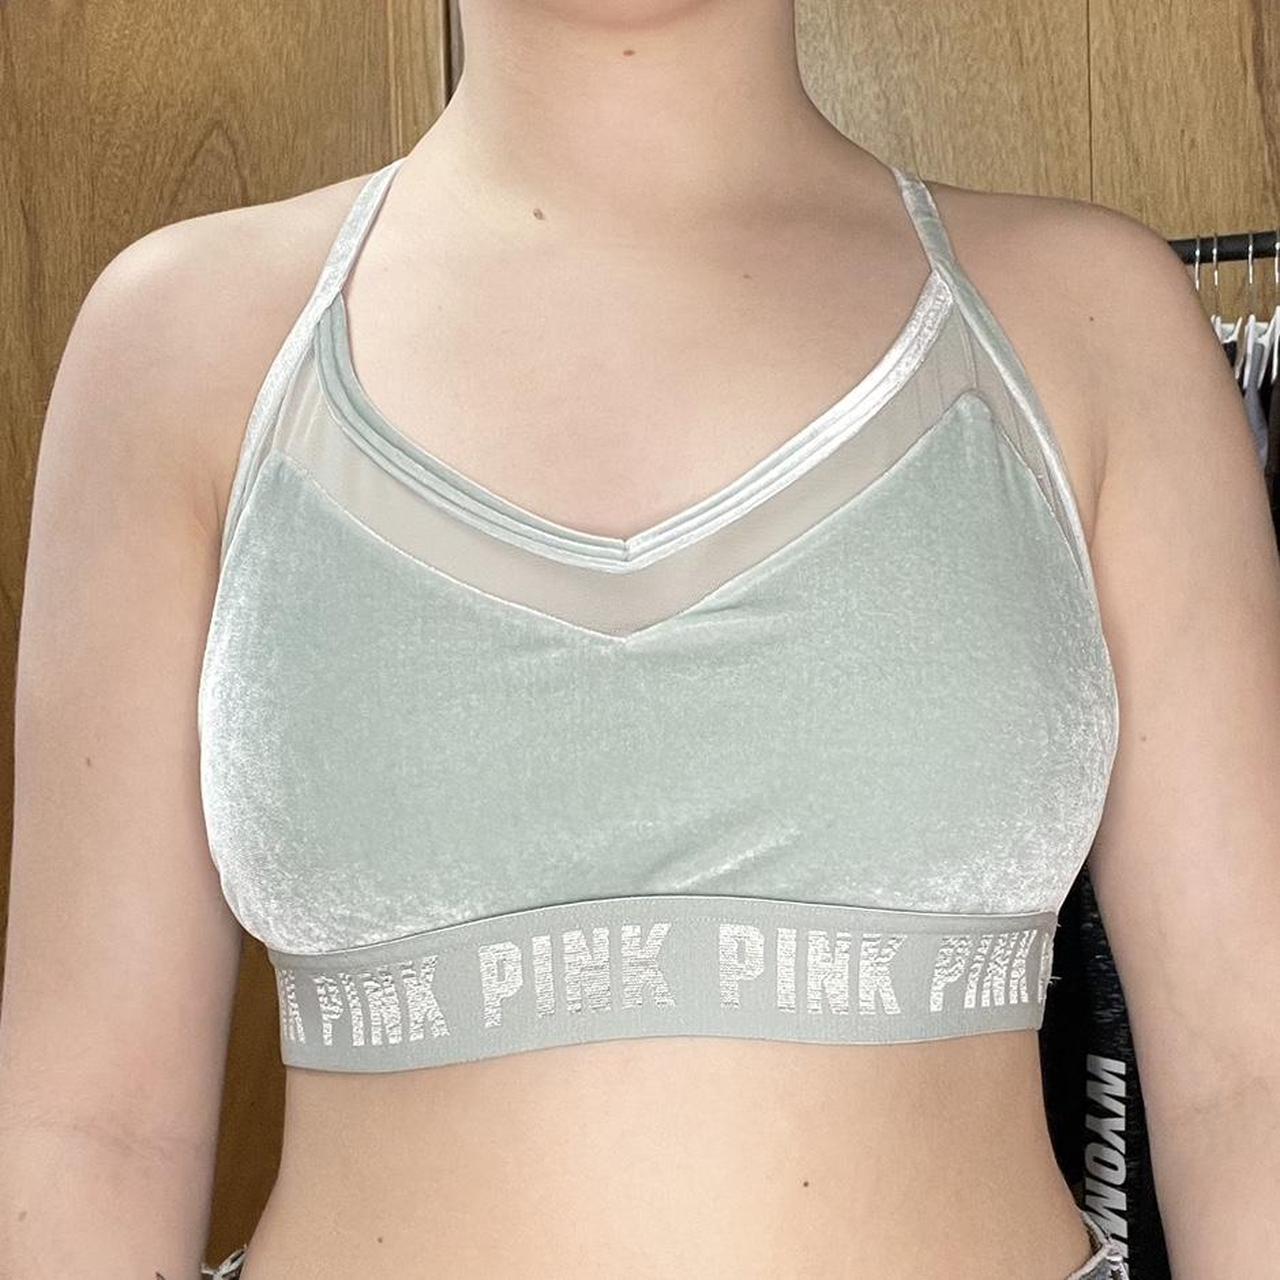 Victoria secret pink green teal and white sports bra - Depop